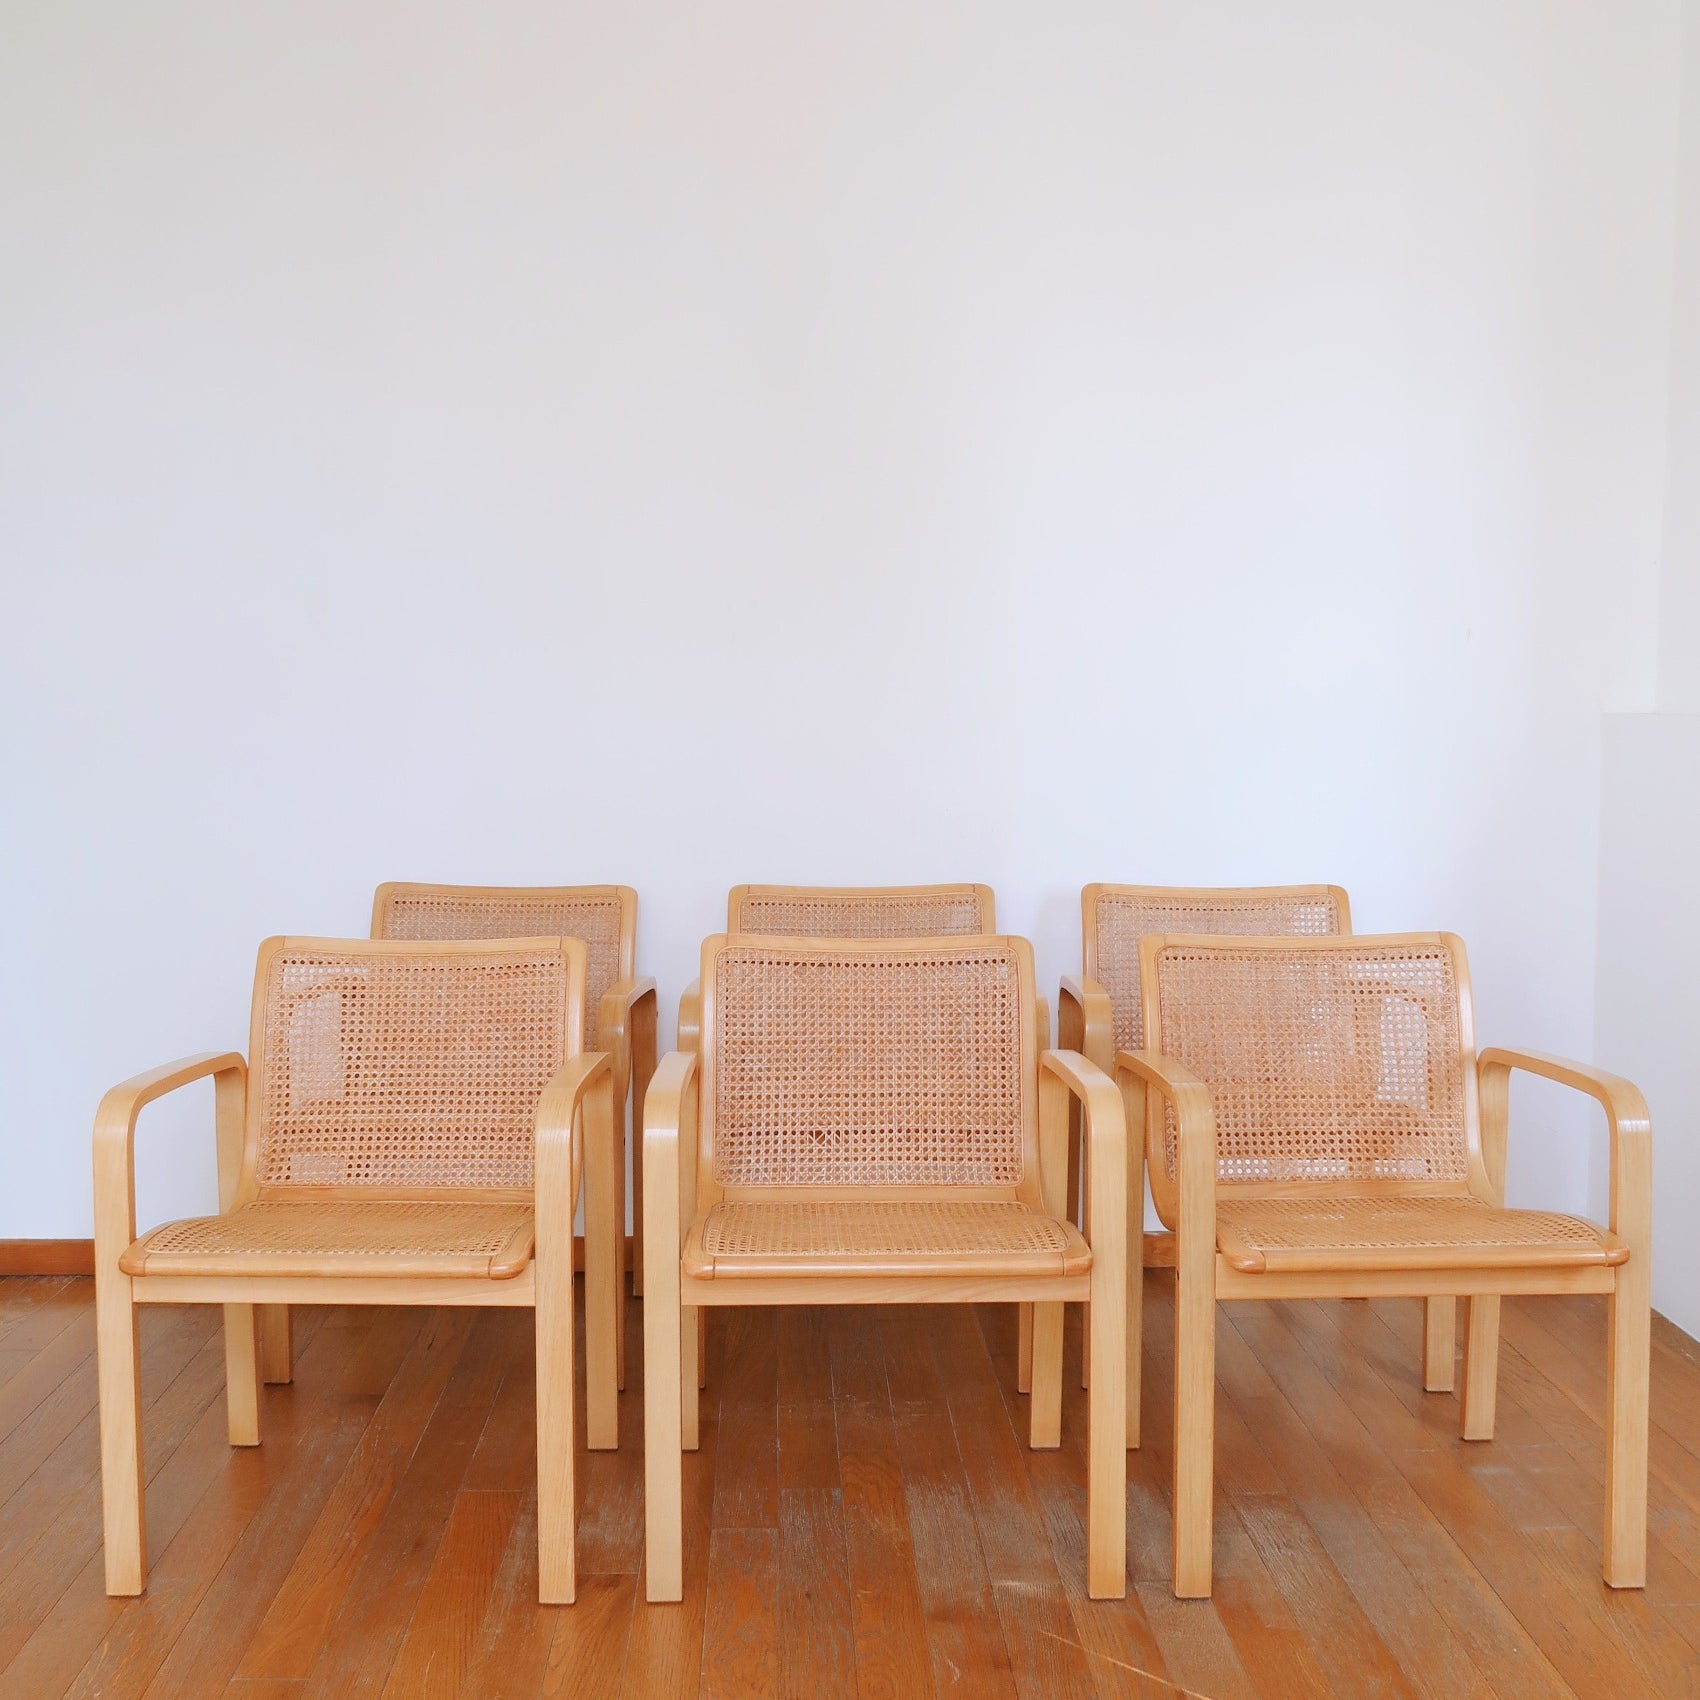 6 fauteuils cannés cannage rotin vintage osier chaise bureau bois clair marcel breuer